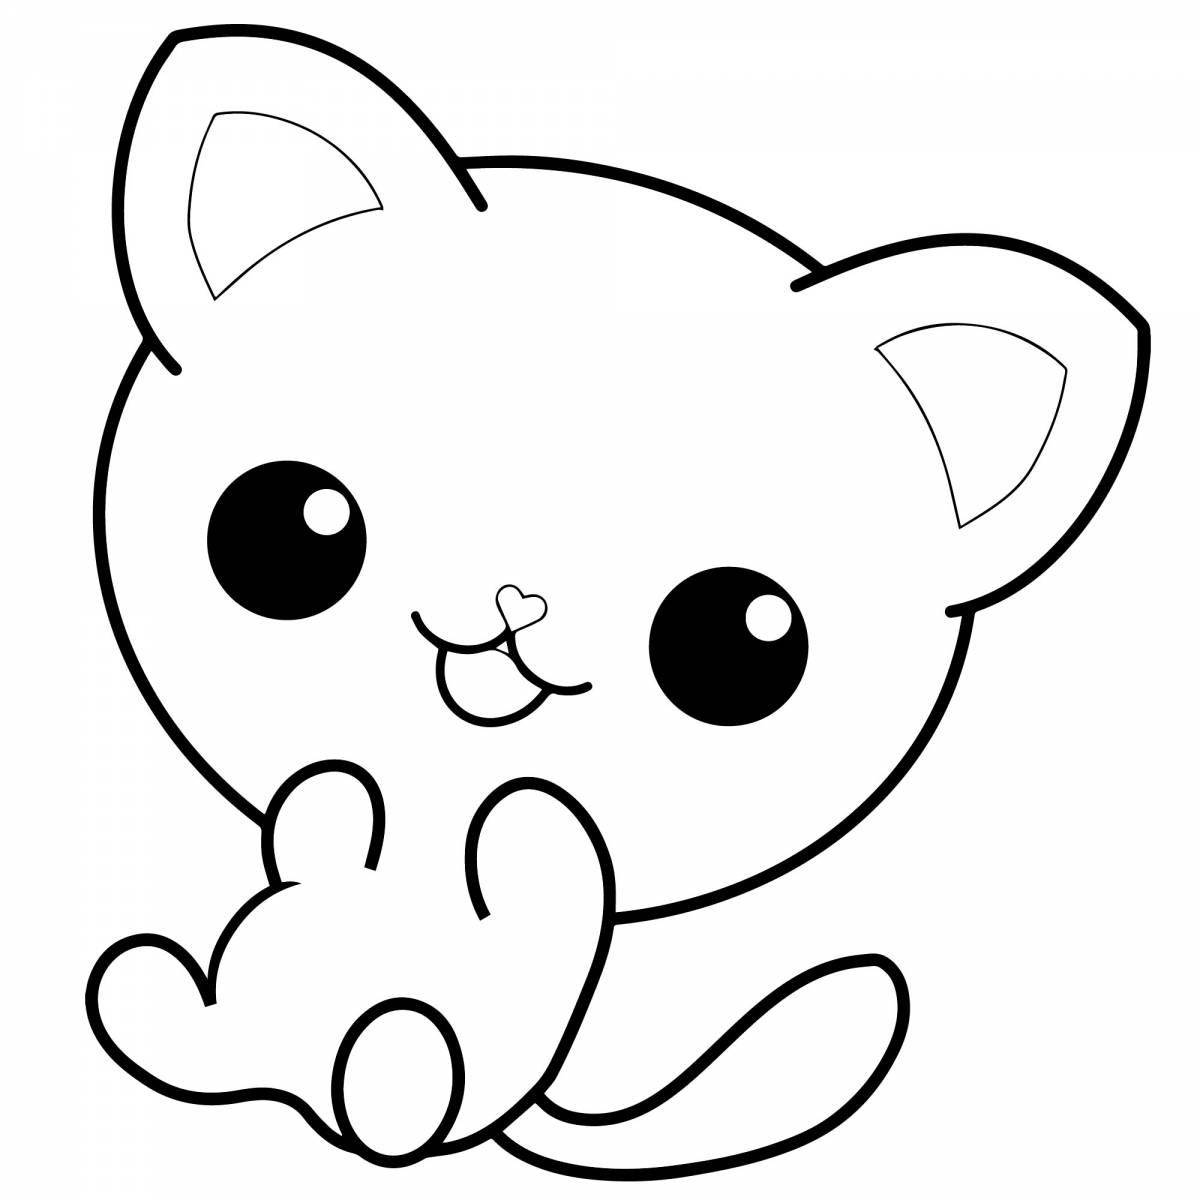 Adorable cute cat coloring book